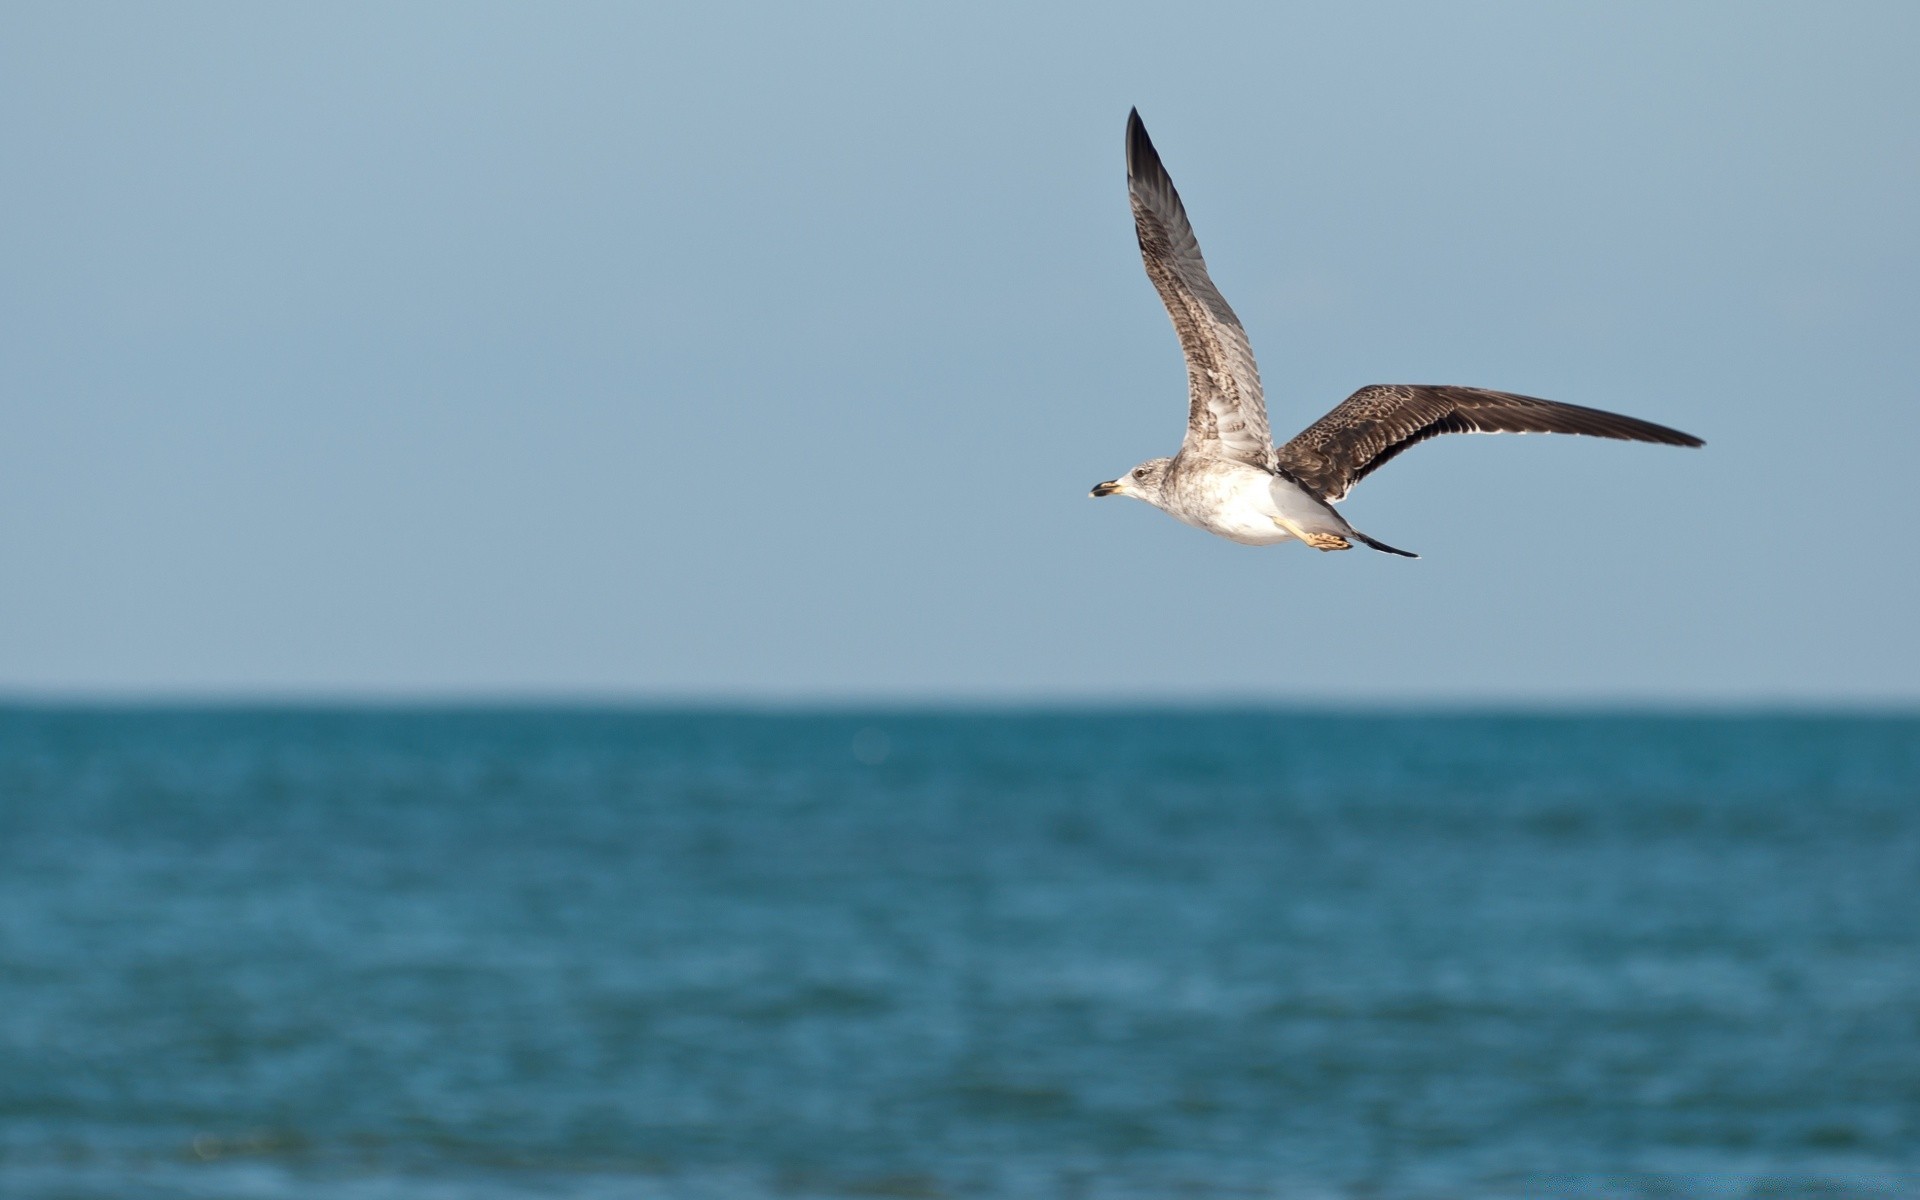 africa water sea bird nature seagulls ocean beach outdoors wildlife seashore sky summer travel